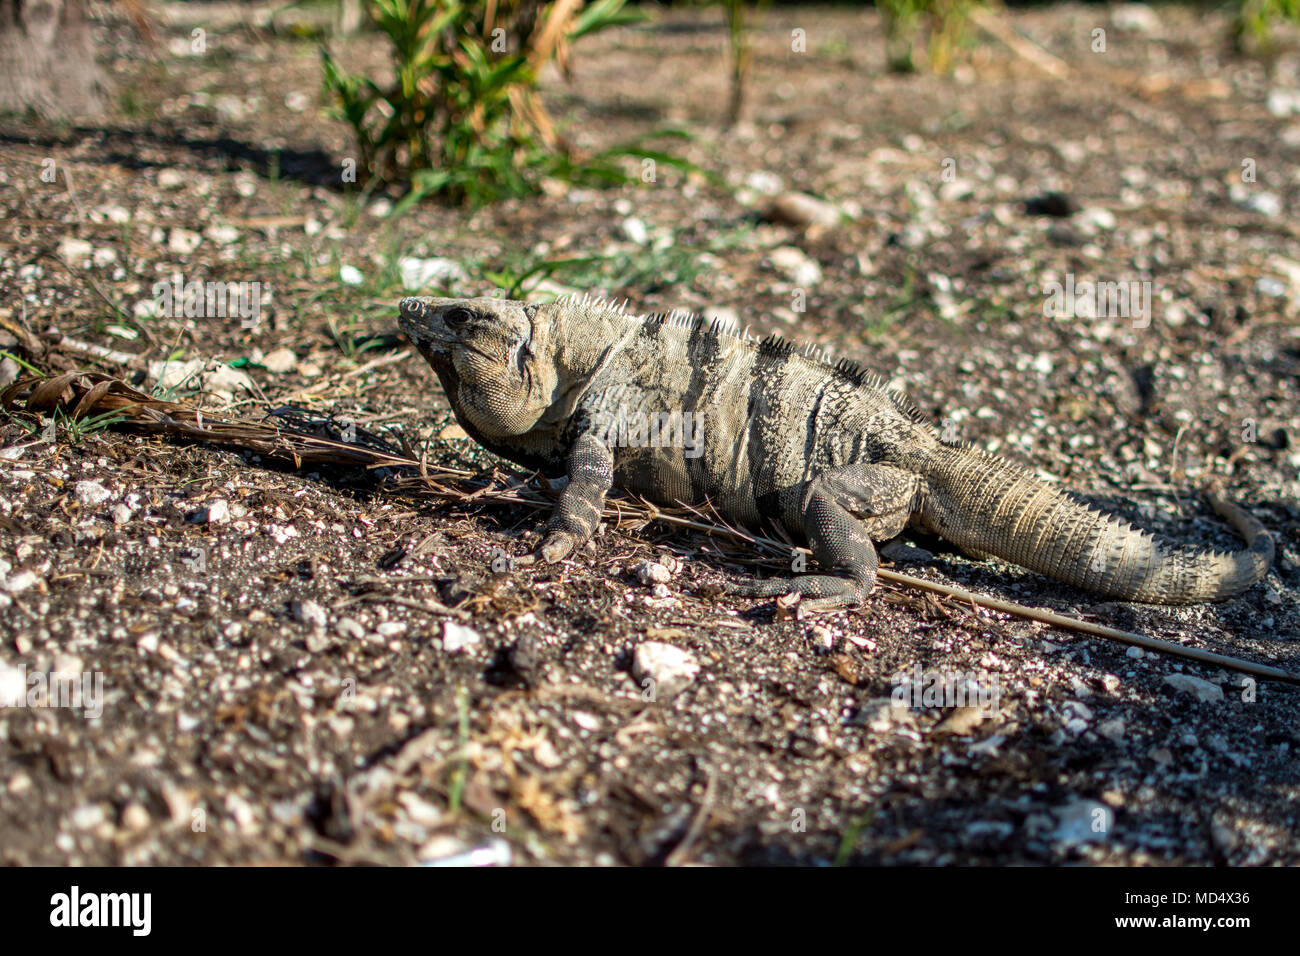 Iguana on a road path close-up Stock Photo